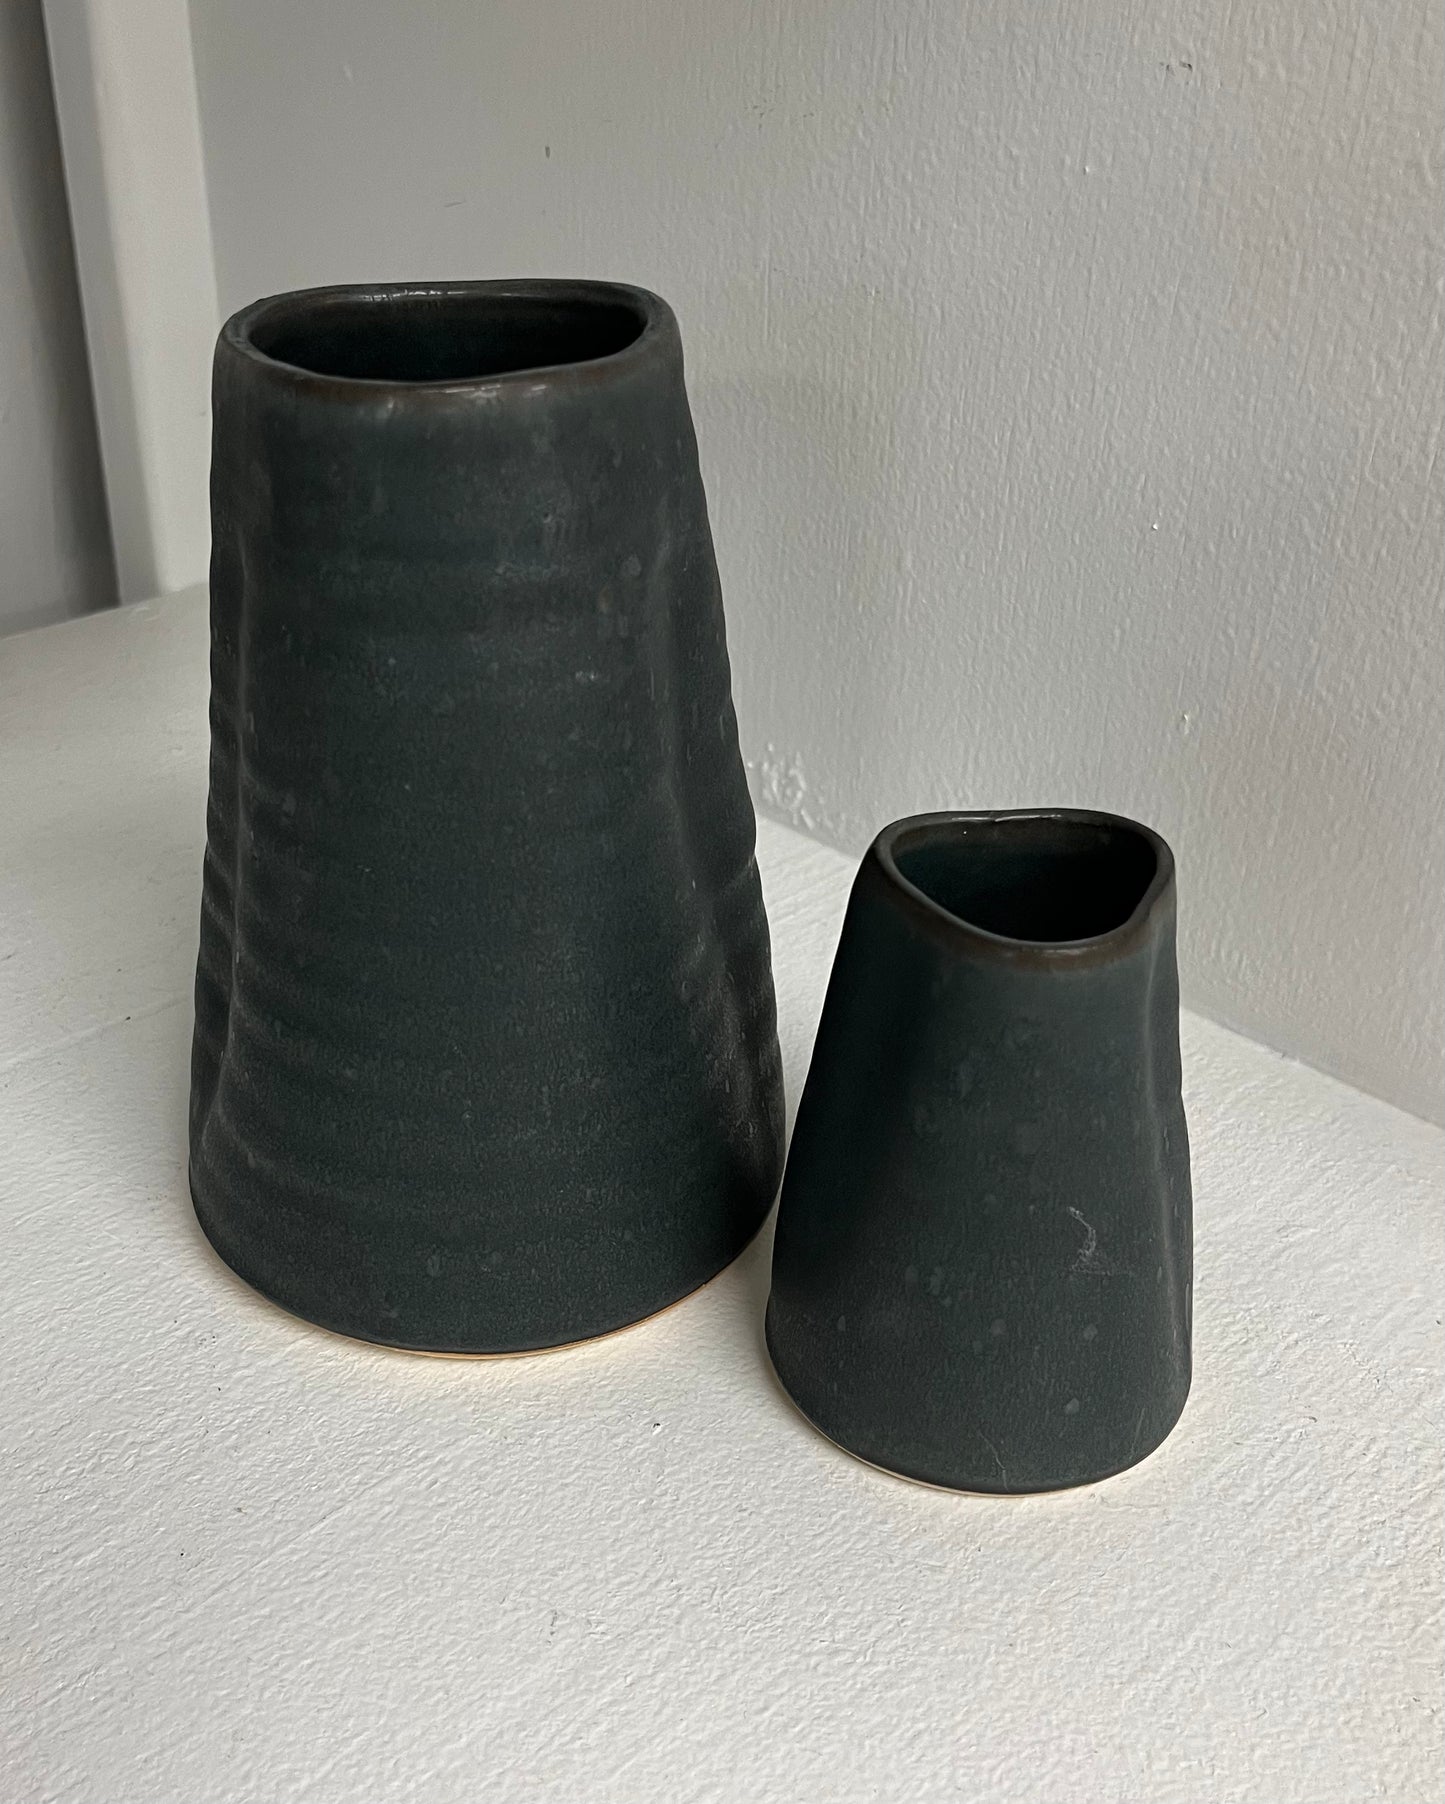 FP Vase in Peppercorn